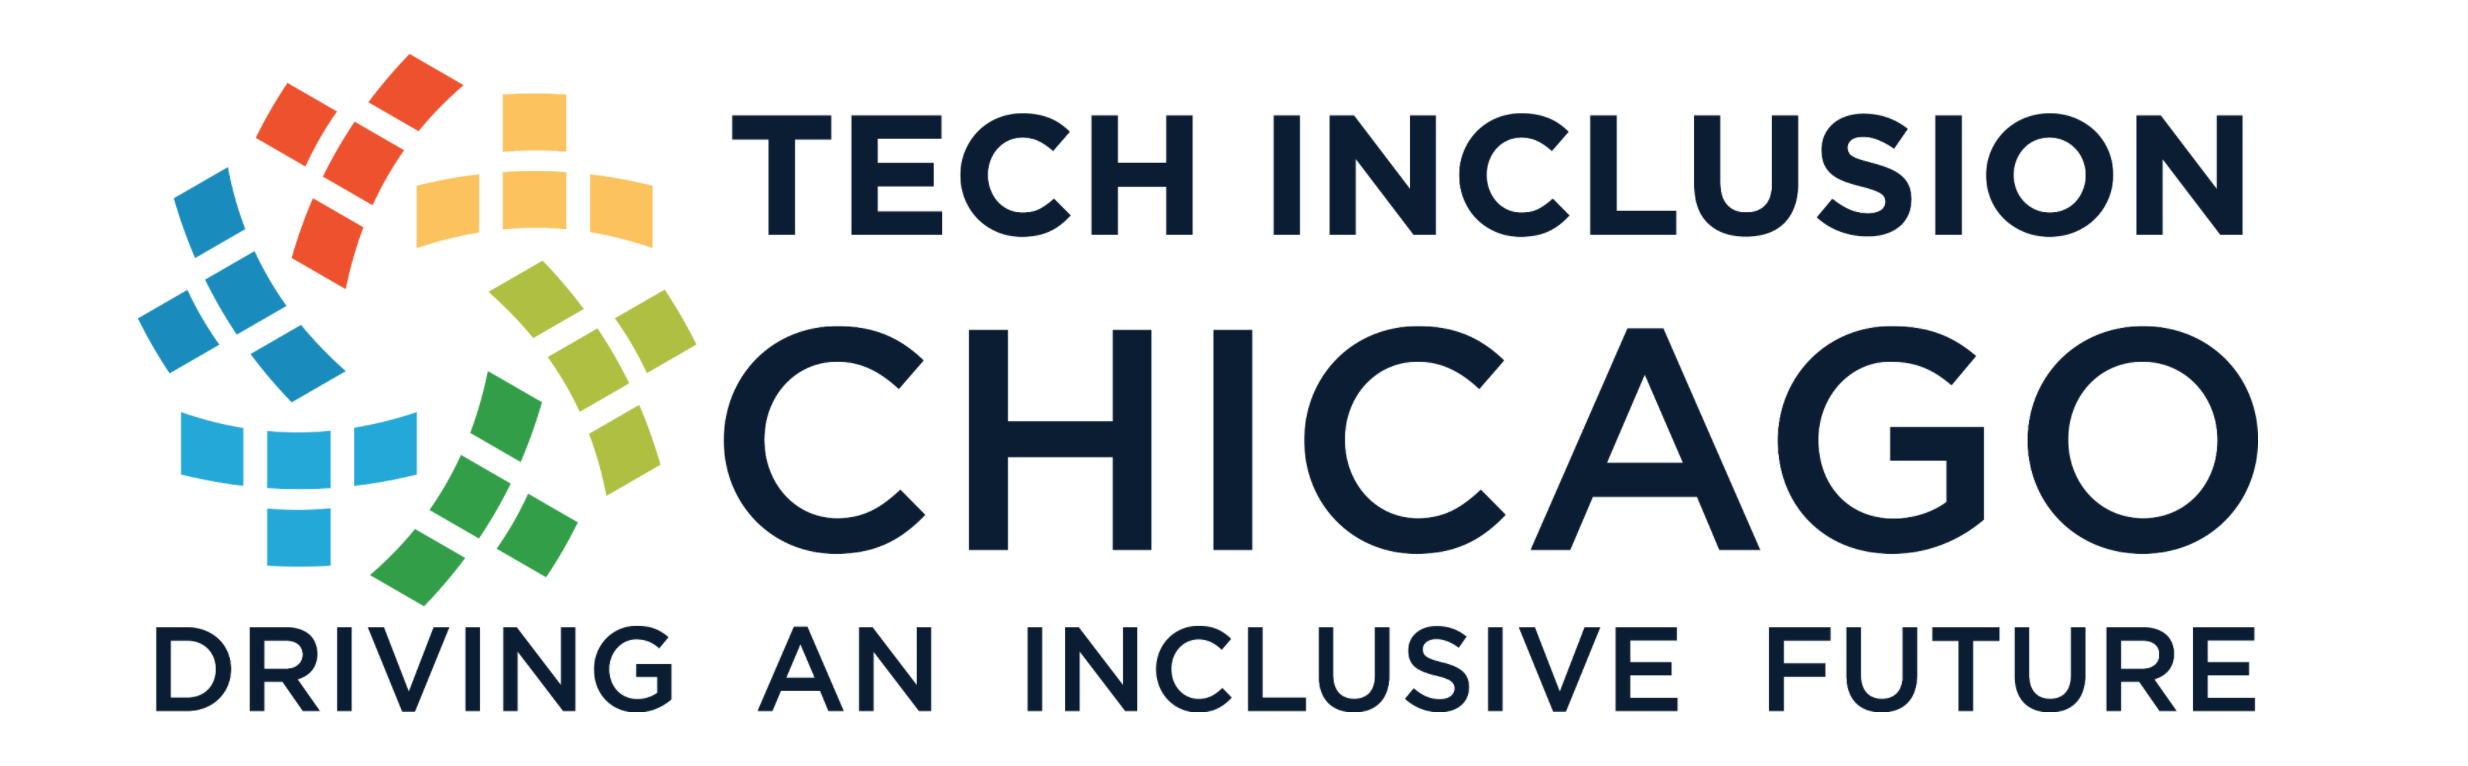 Tech Inclusion Chicago Forum